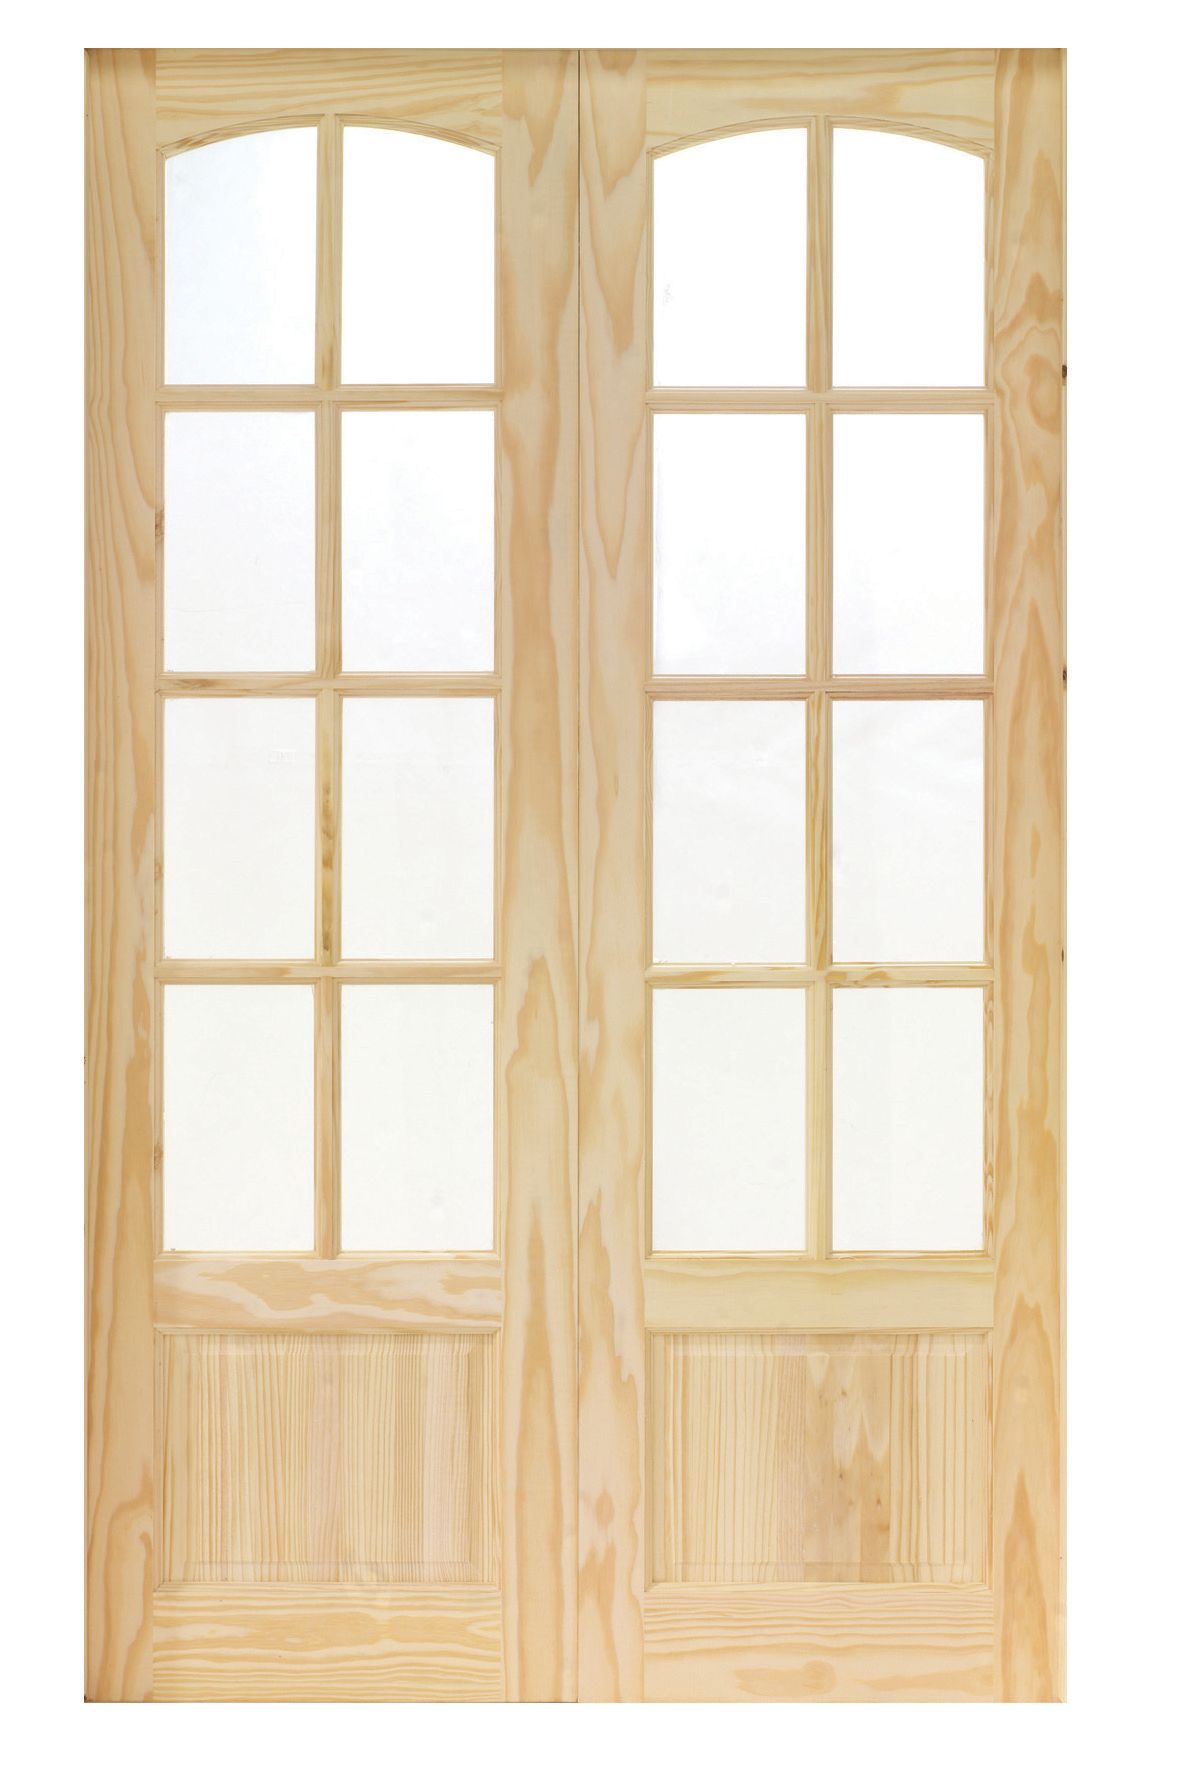 Image of Wickes Newland Glazed Pine 8 Lite Internal French Doors - 1981 x 1170mm